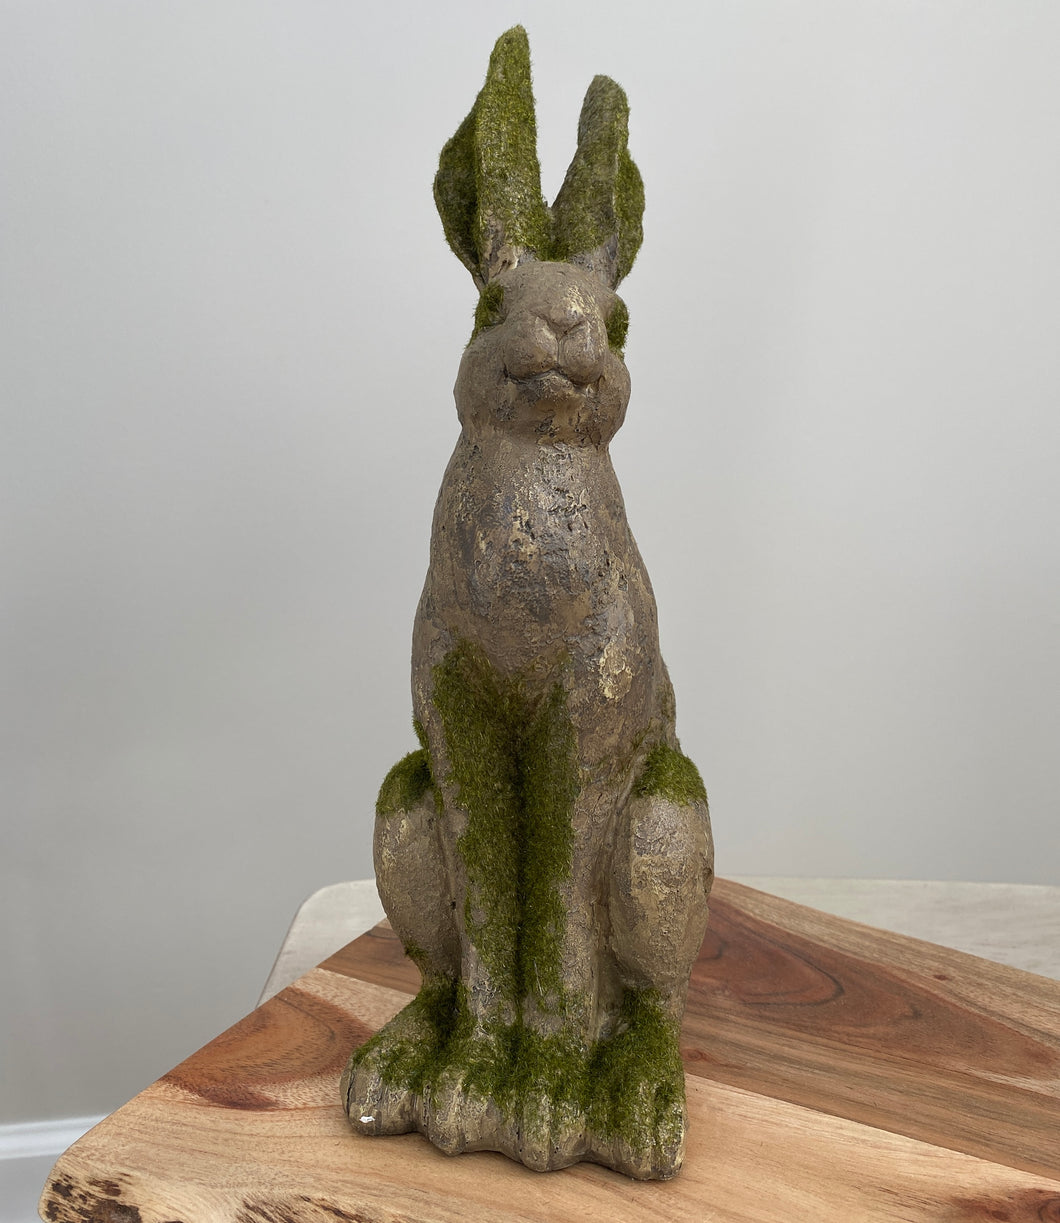 Mossy Rabbit Statue - Sitting